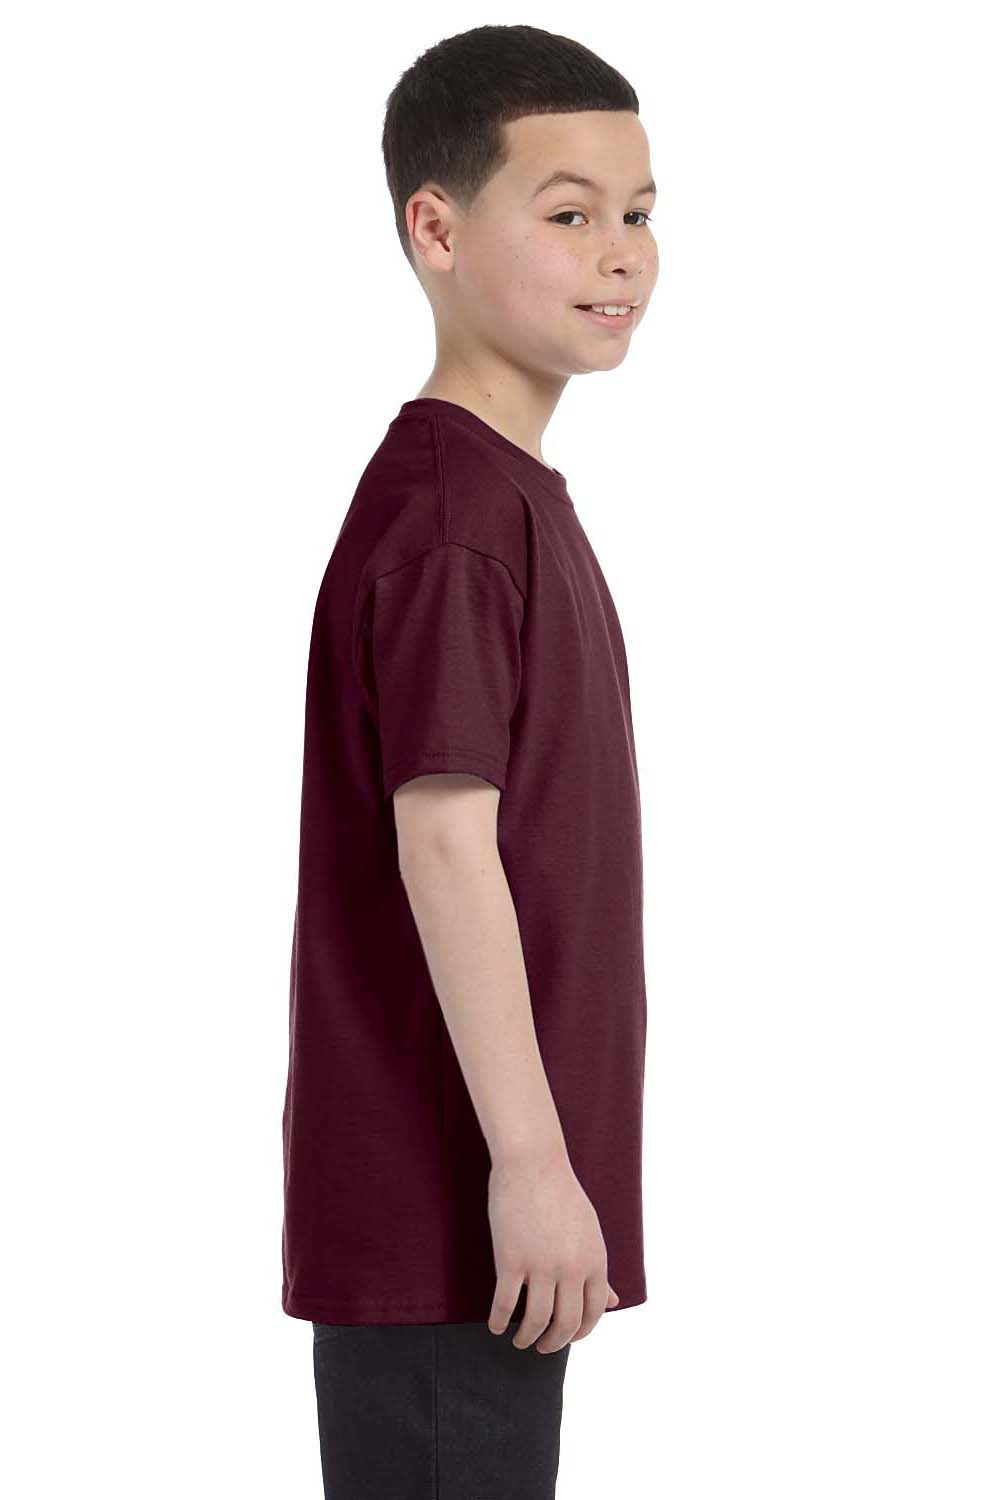 Jerzees 29B Youth Dri-Power Moisture Wicking Short Sleeve Crewneck T-Shirt Maroon Side